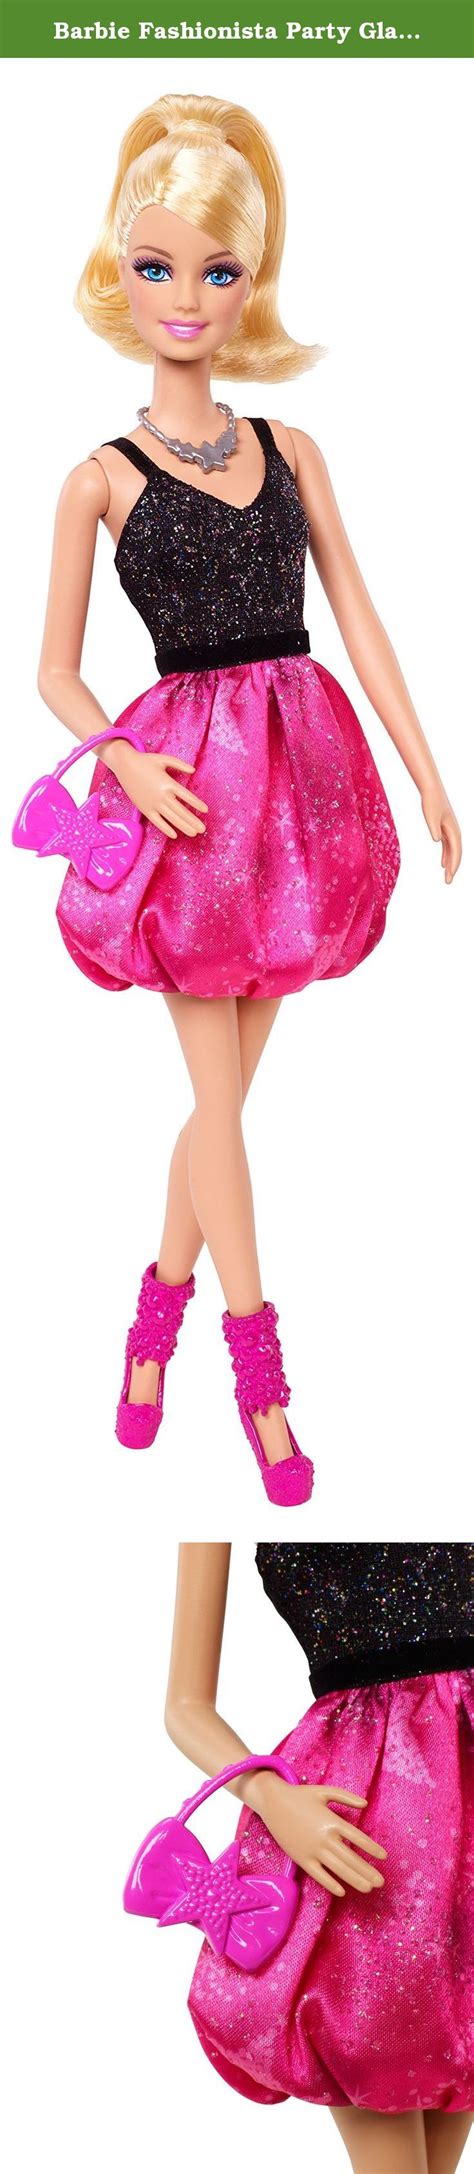 Barbie Fashionista Party Glam Barbie Doll Pink And Black Dress Barbie